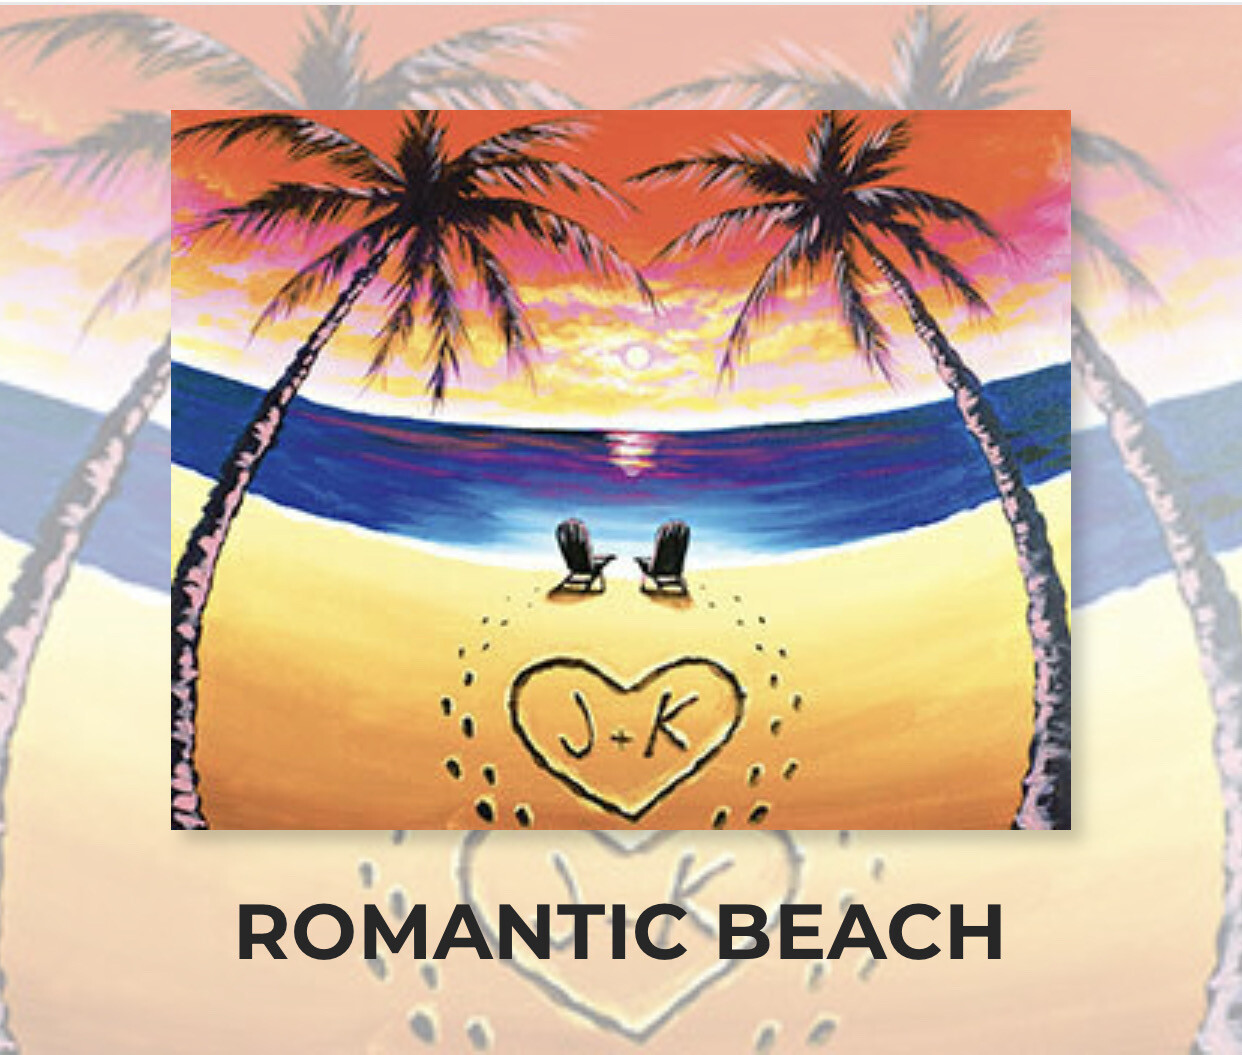 Romantic Beach ADULT Acrylic Paint On Canvas DIY Art Kit - 3 Week Special Order